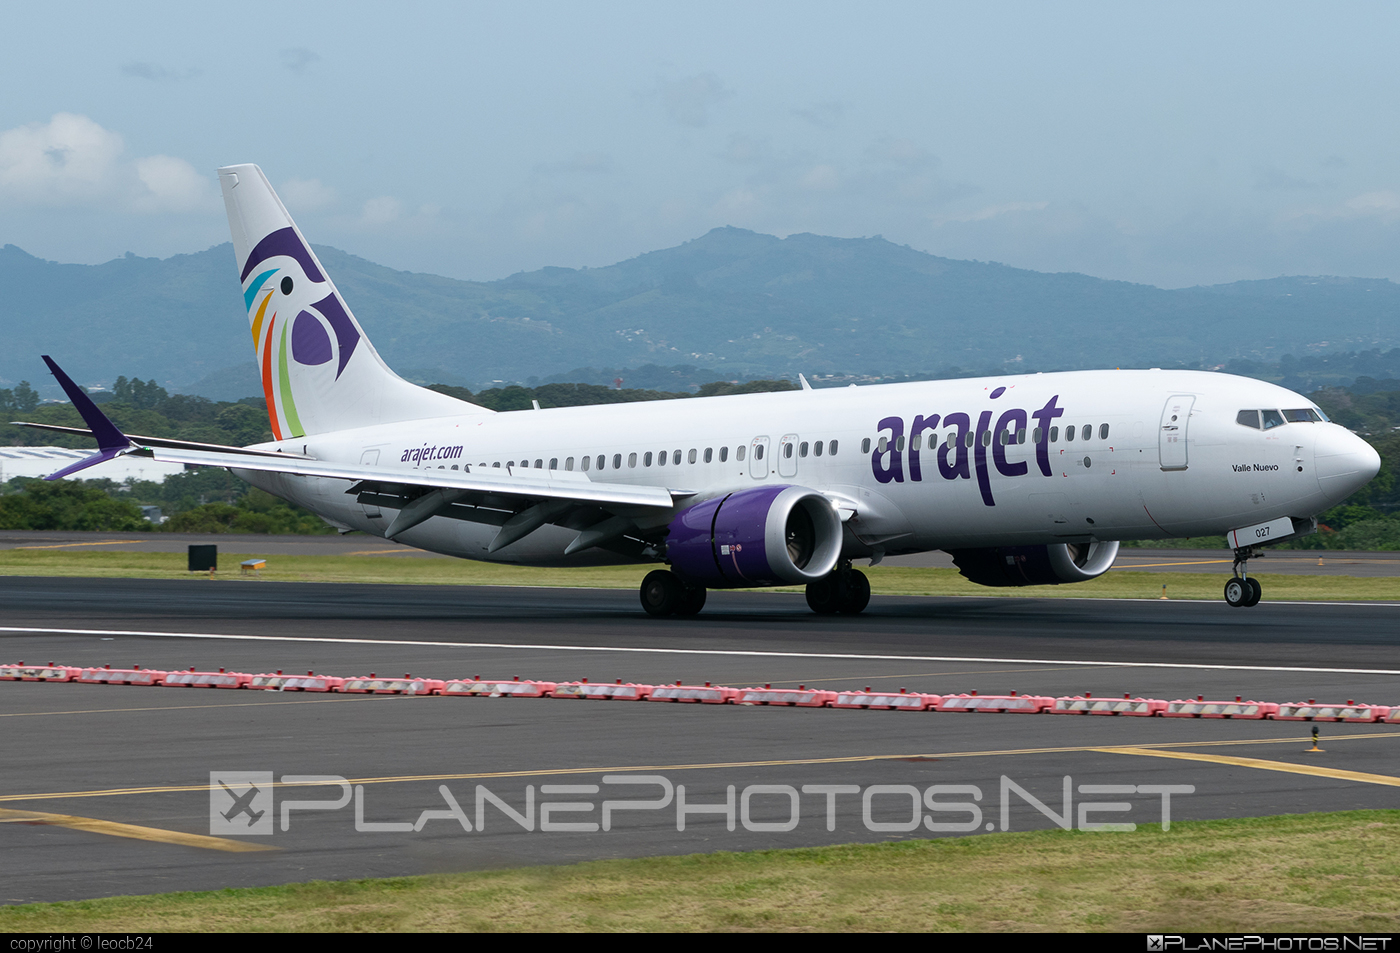 Boeing 737-8 MAX - HI1027 operated by Arajet #ValleNuevo #arajet #b737 #b737max #boeing #boeing737